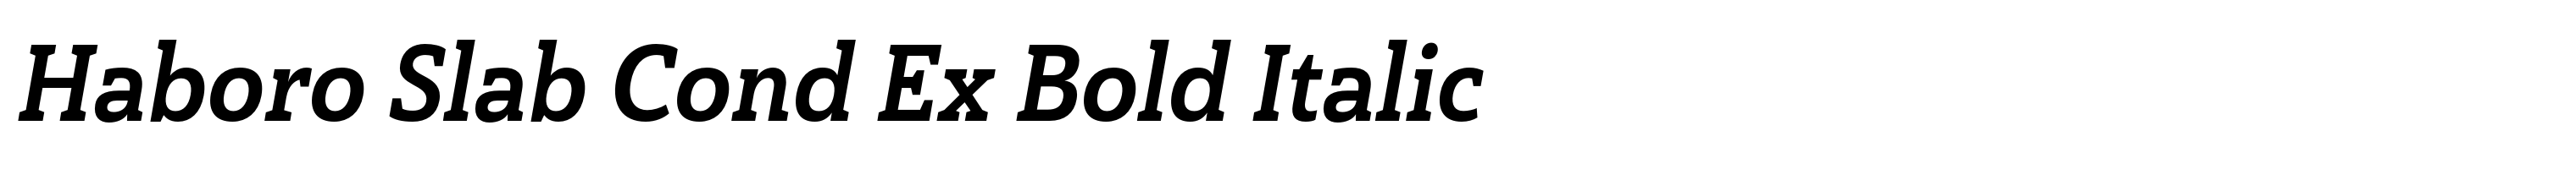 Haboro Slab Cond Ex Bold Italic